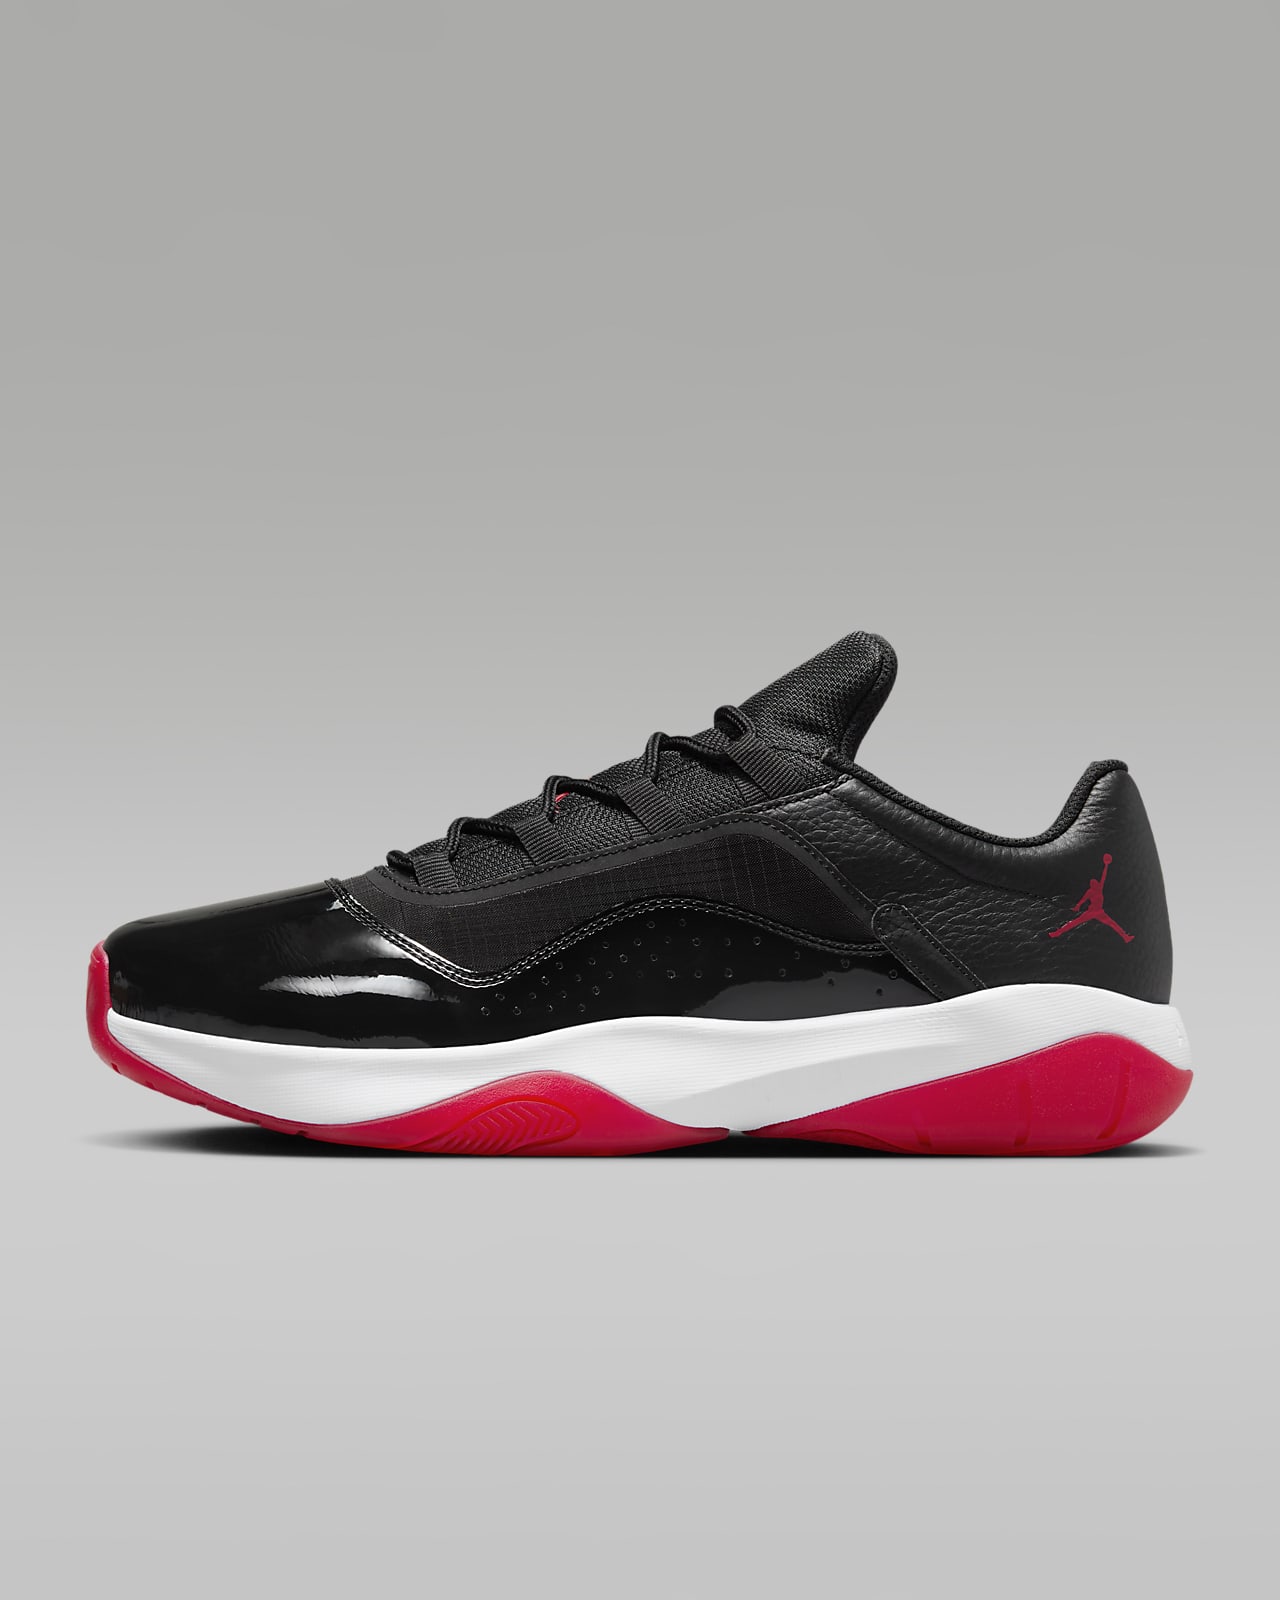 Nike Air Jordan 11 Retro Space Jam | Size 14, Sneaker in Black/White/Blue